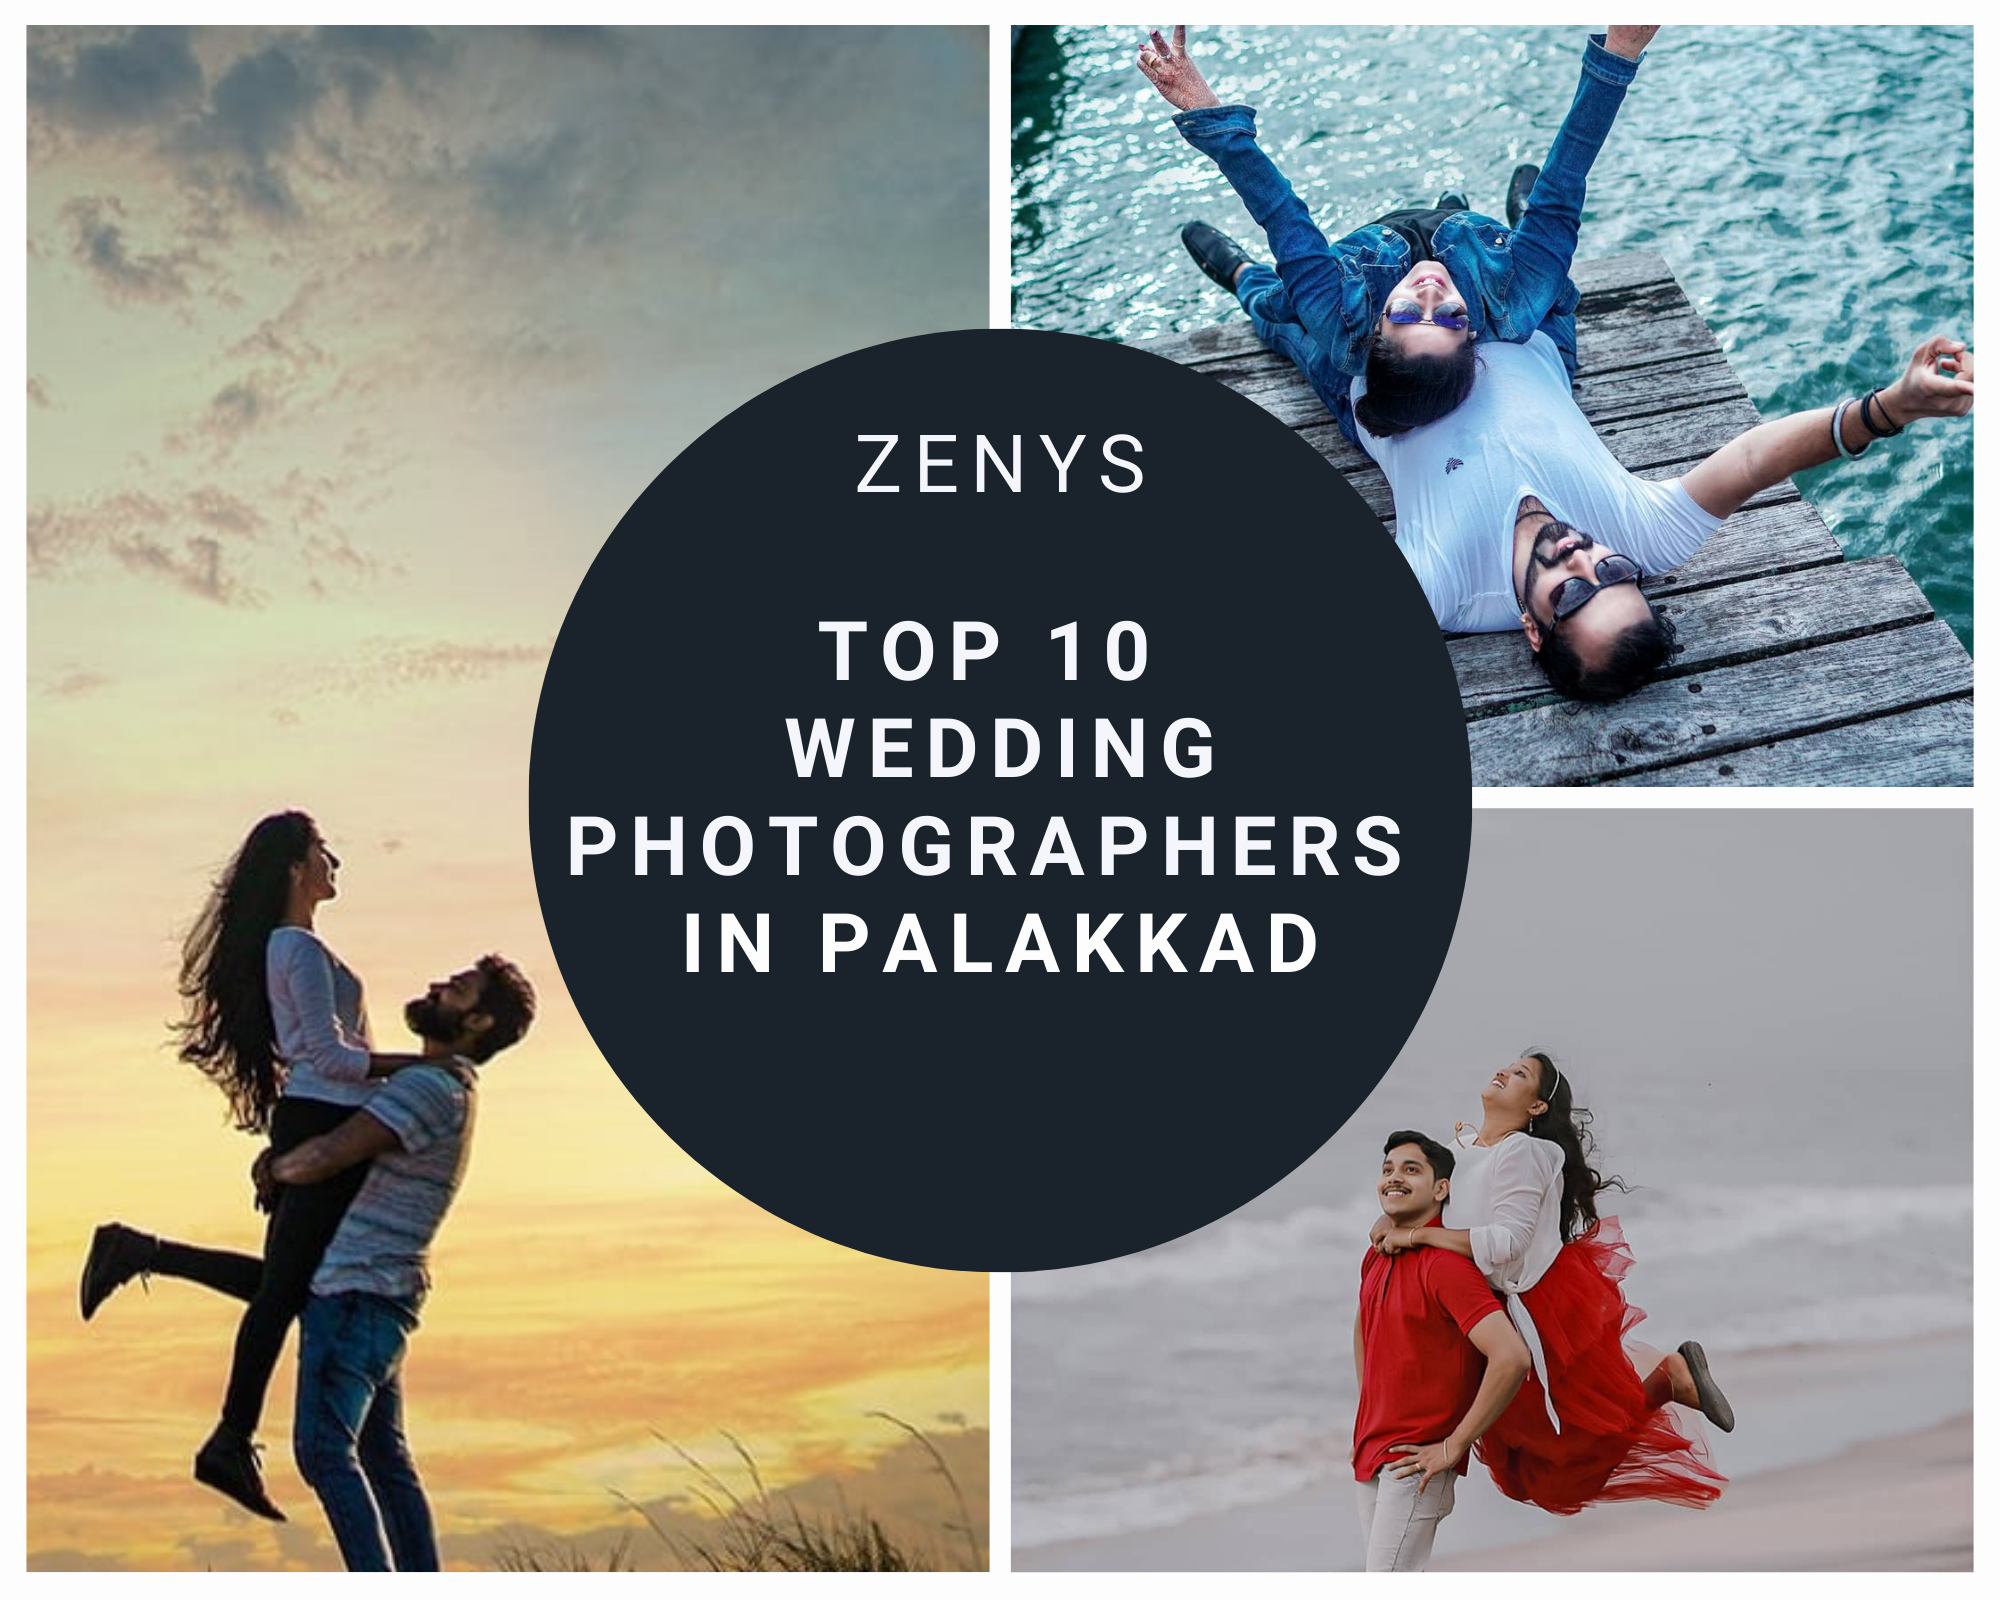 Top 10 Wedding Photographers in Palakkad